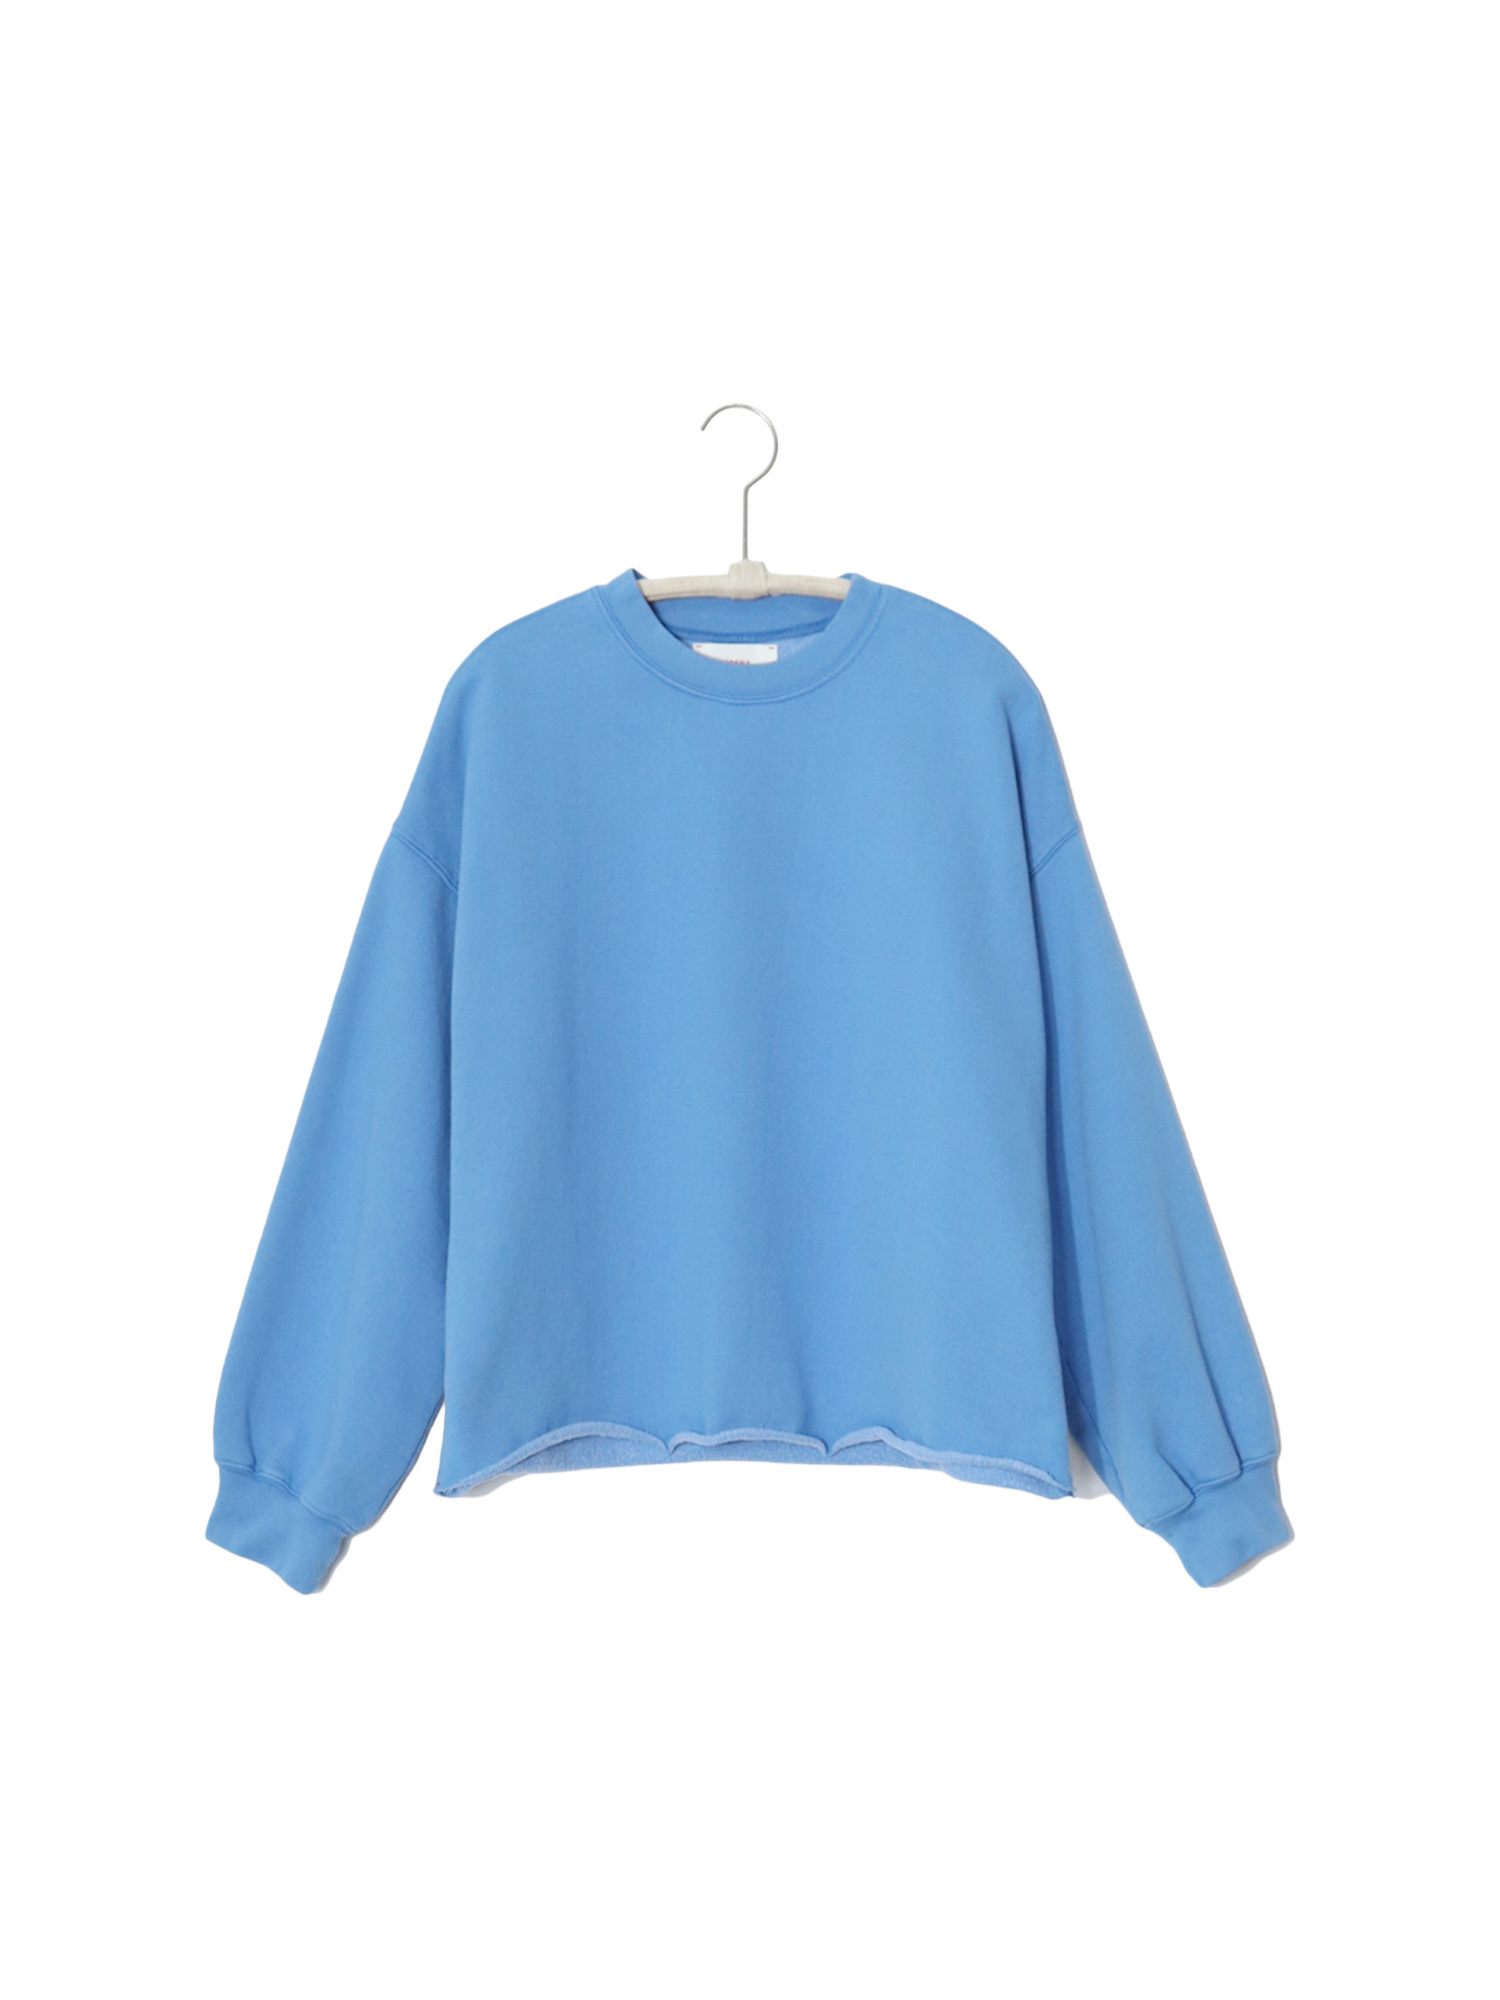 Sweatshirt, Honor, blue lotus, XIRENA